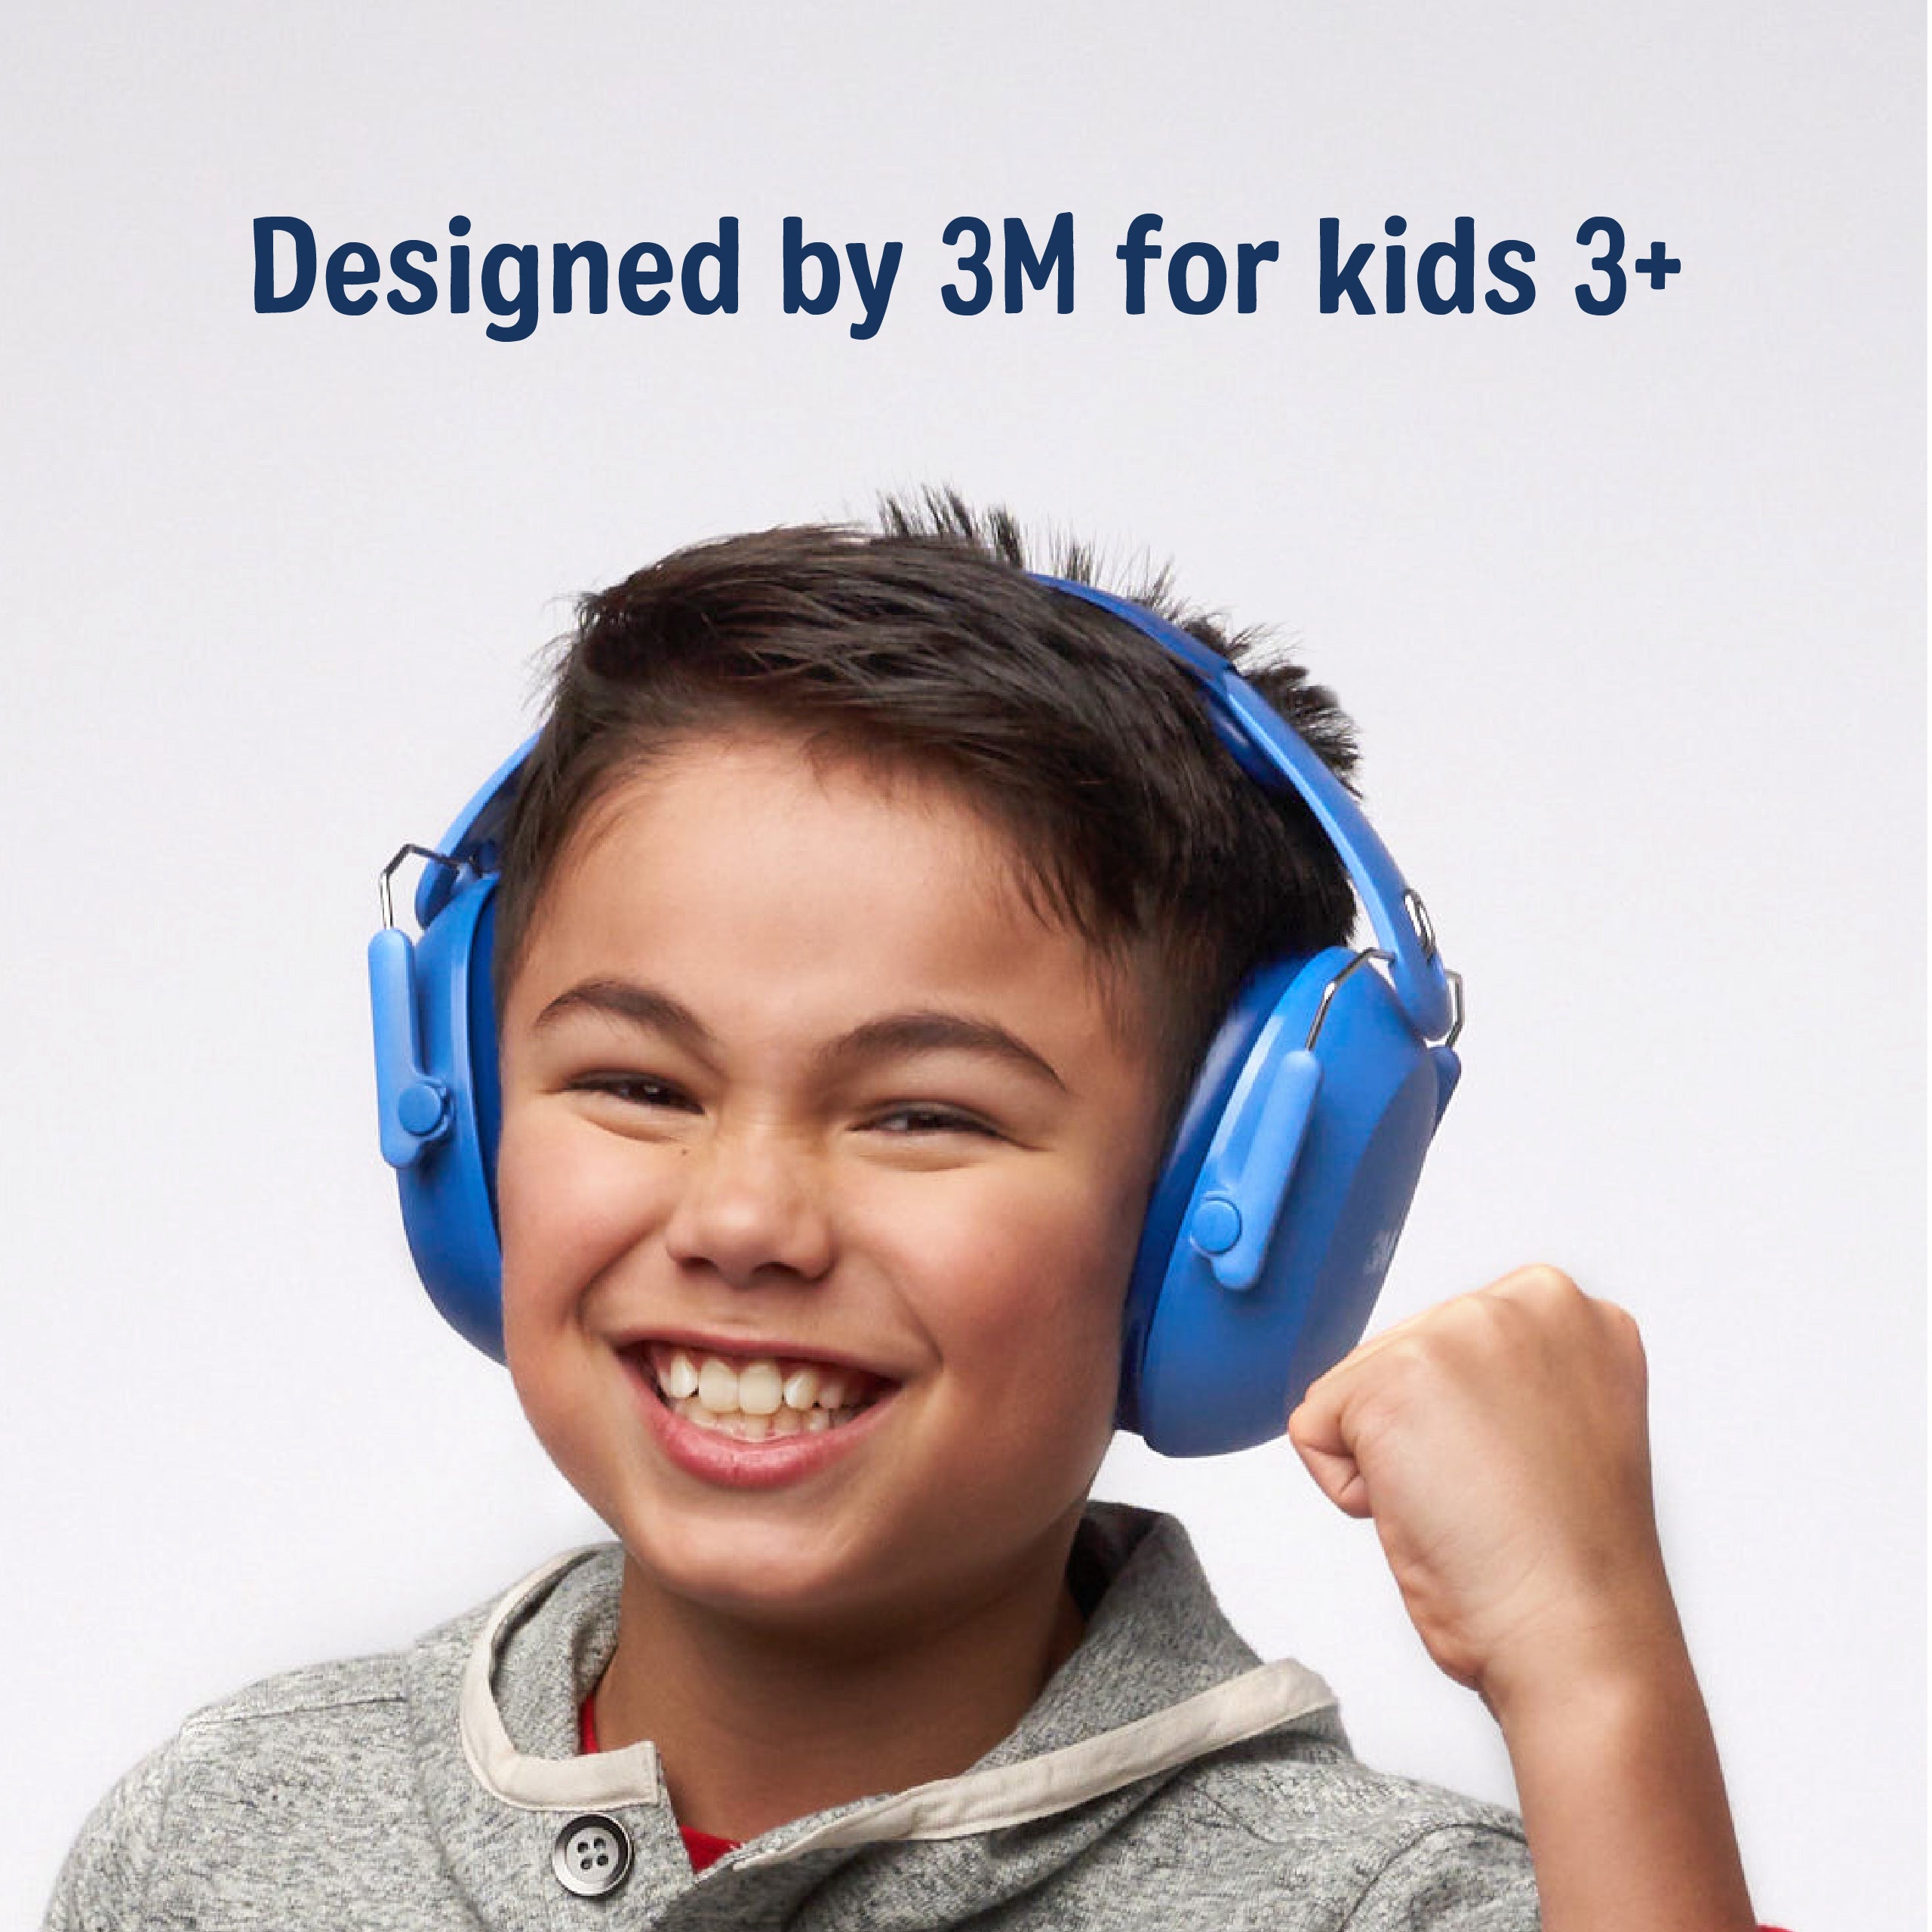 3M™ Kids Hearing Protection PKIDSB-BLU, Blue, 4 ea/case